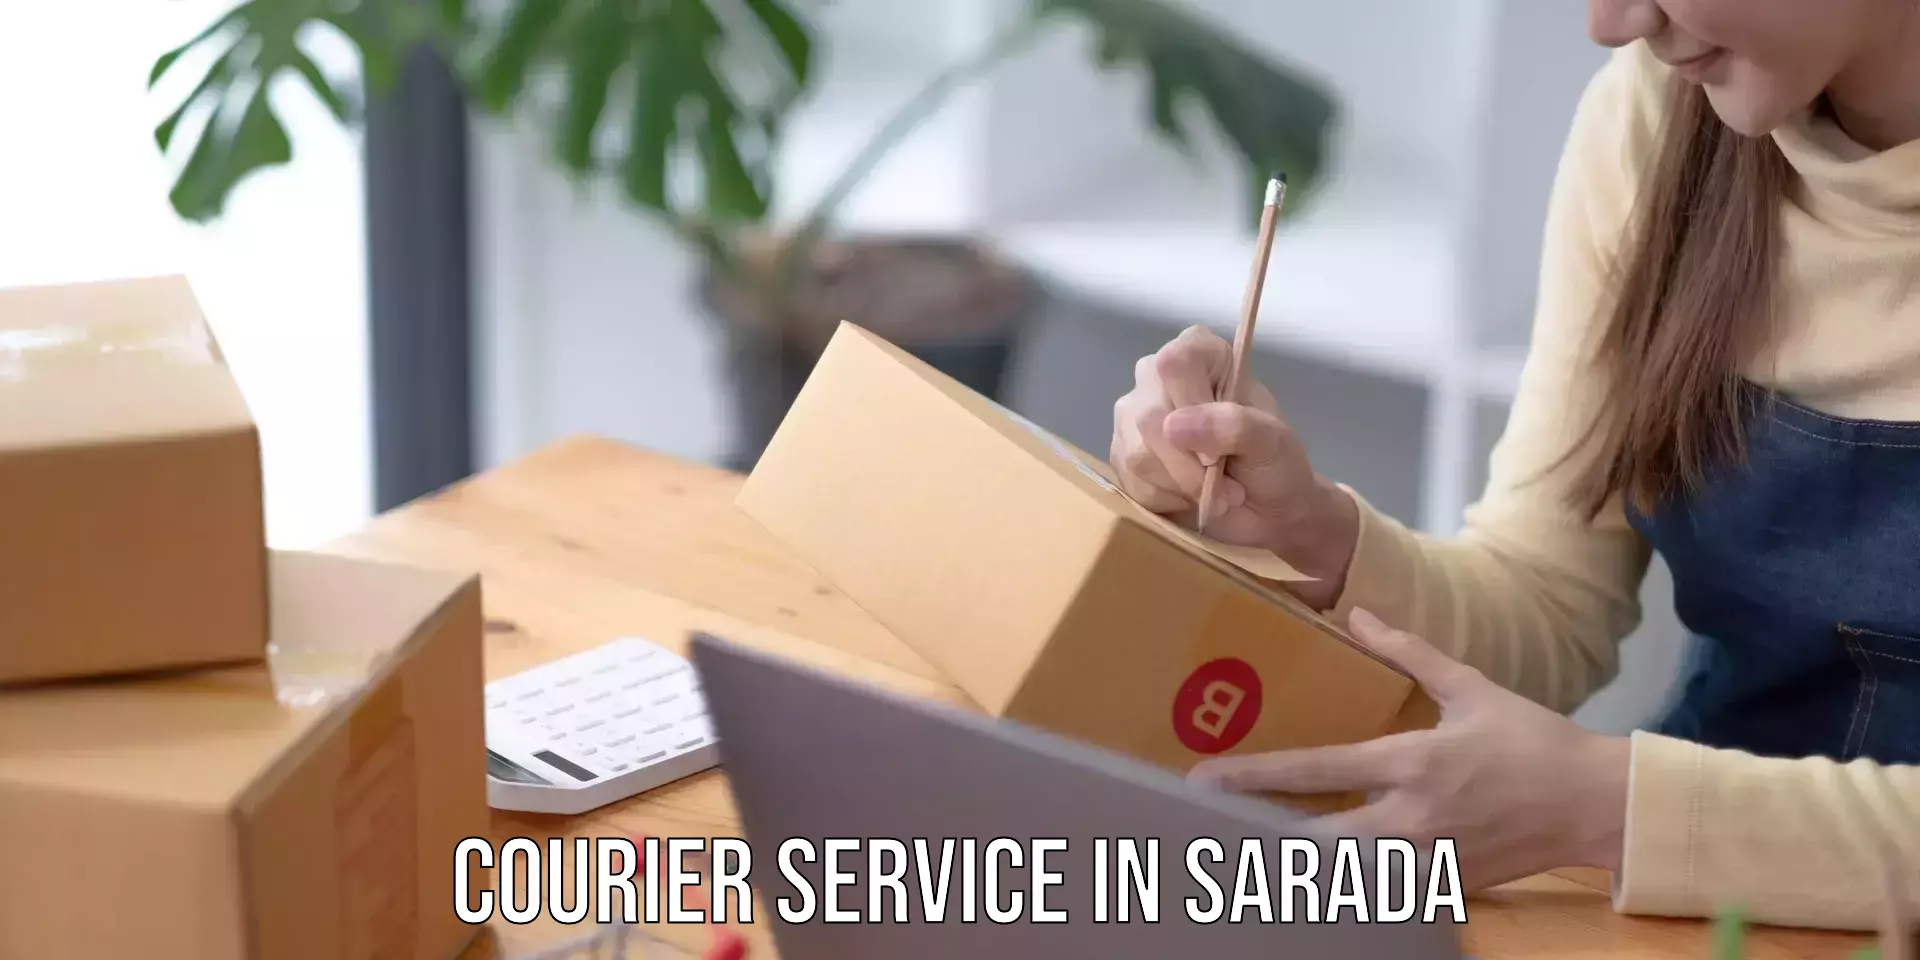 Urgent courier needs in Sarada